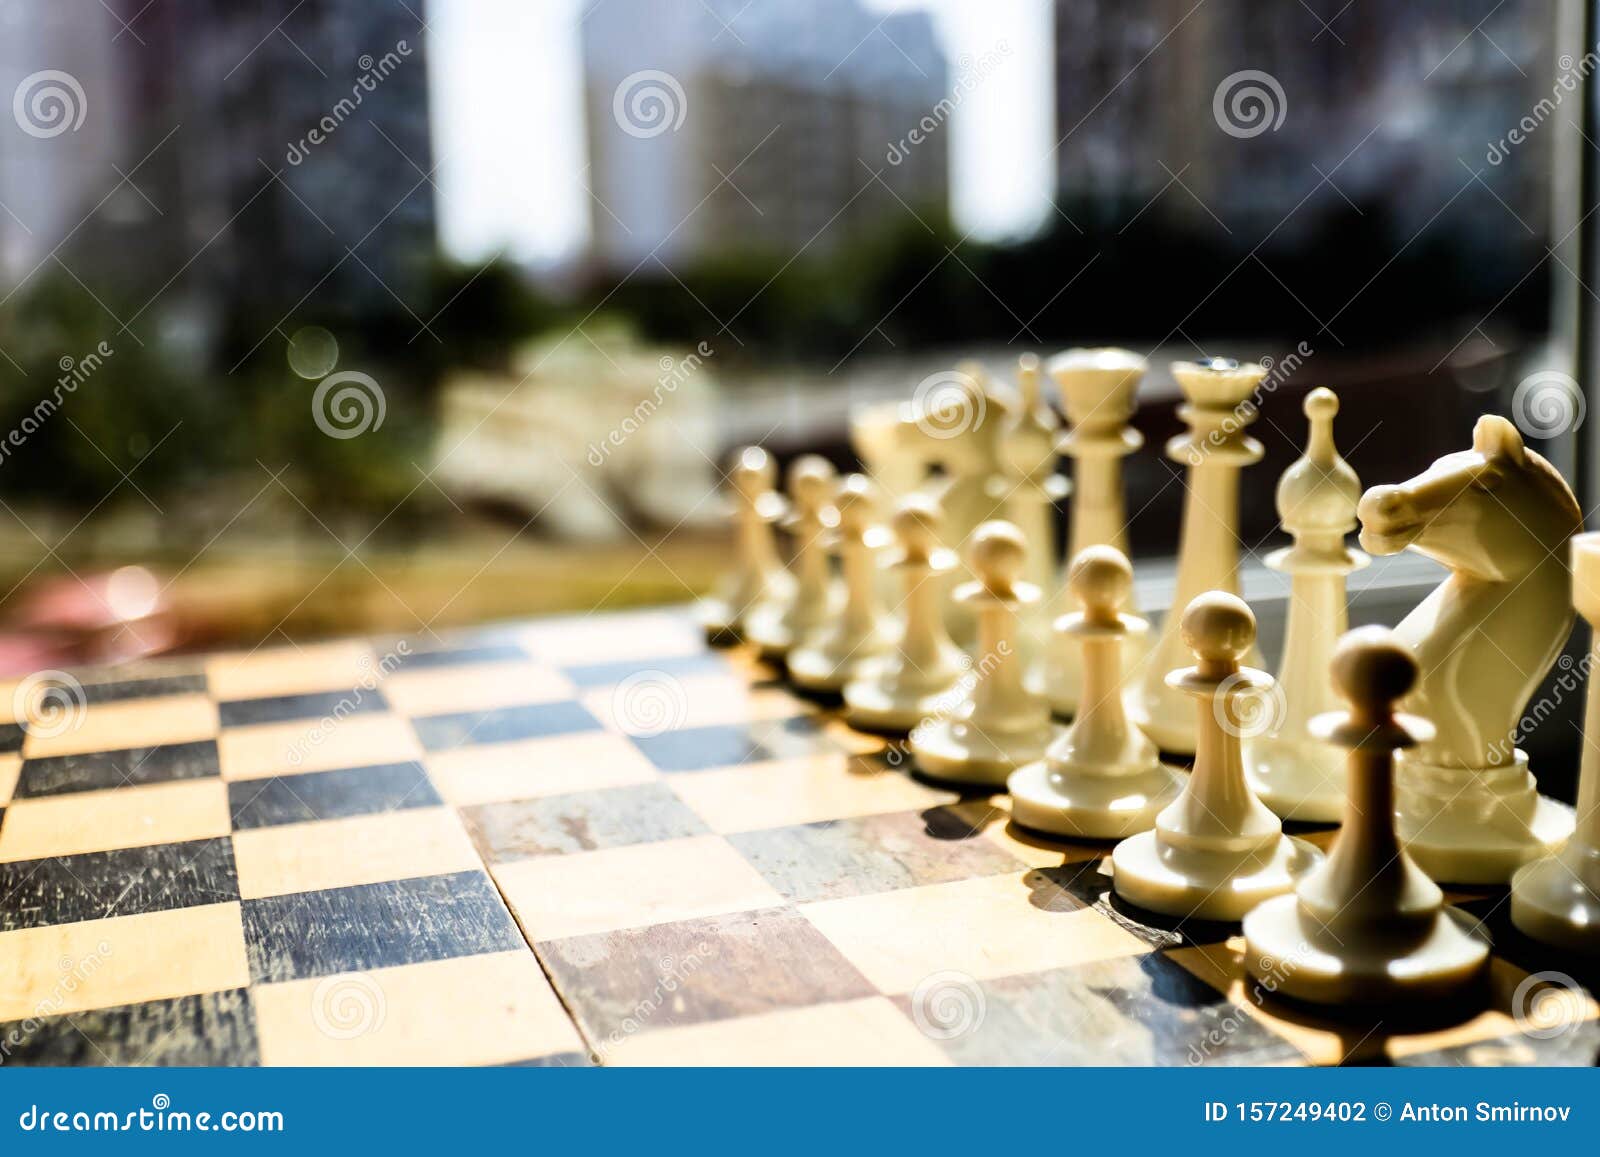 Chess but make it an open world game.